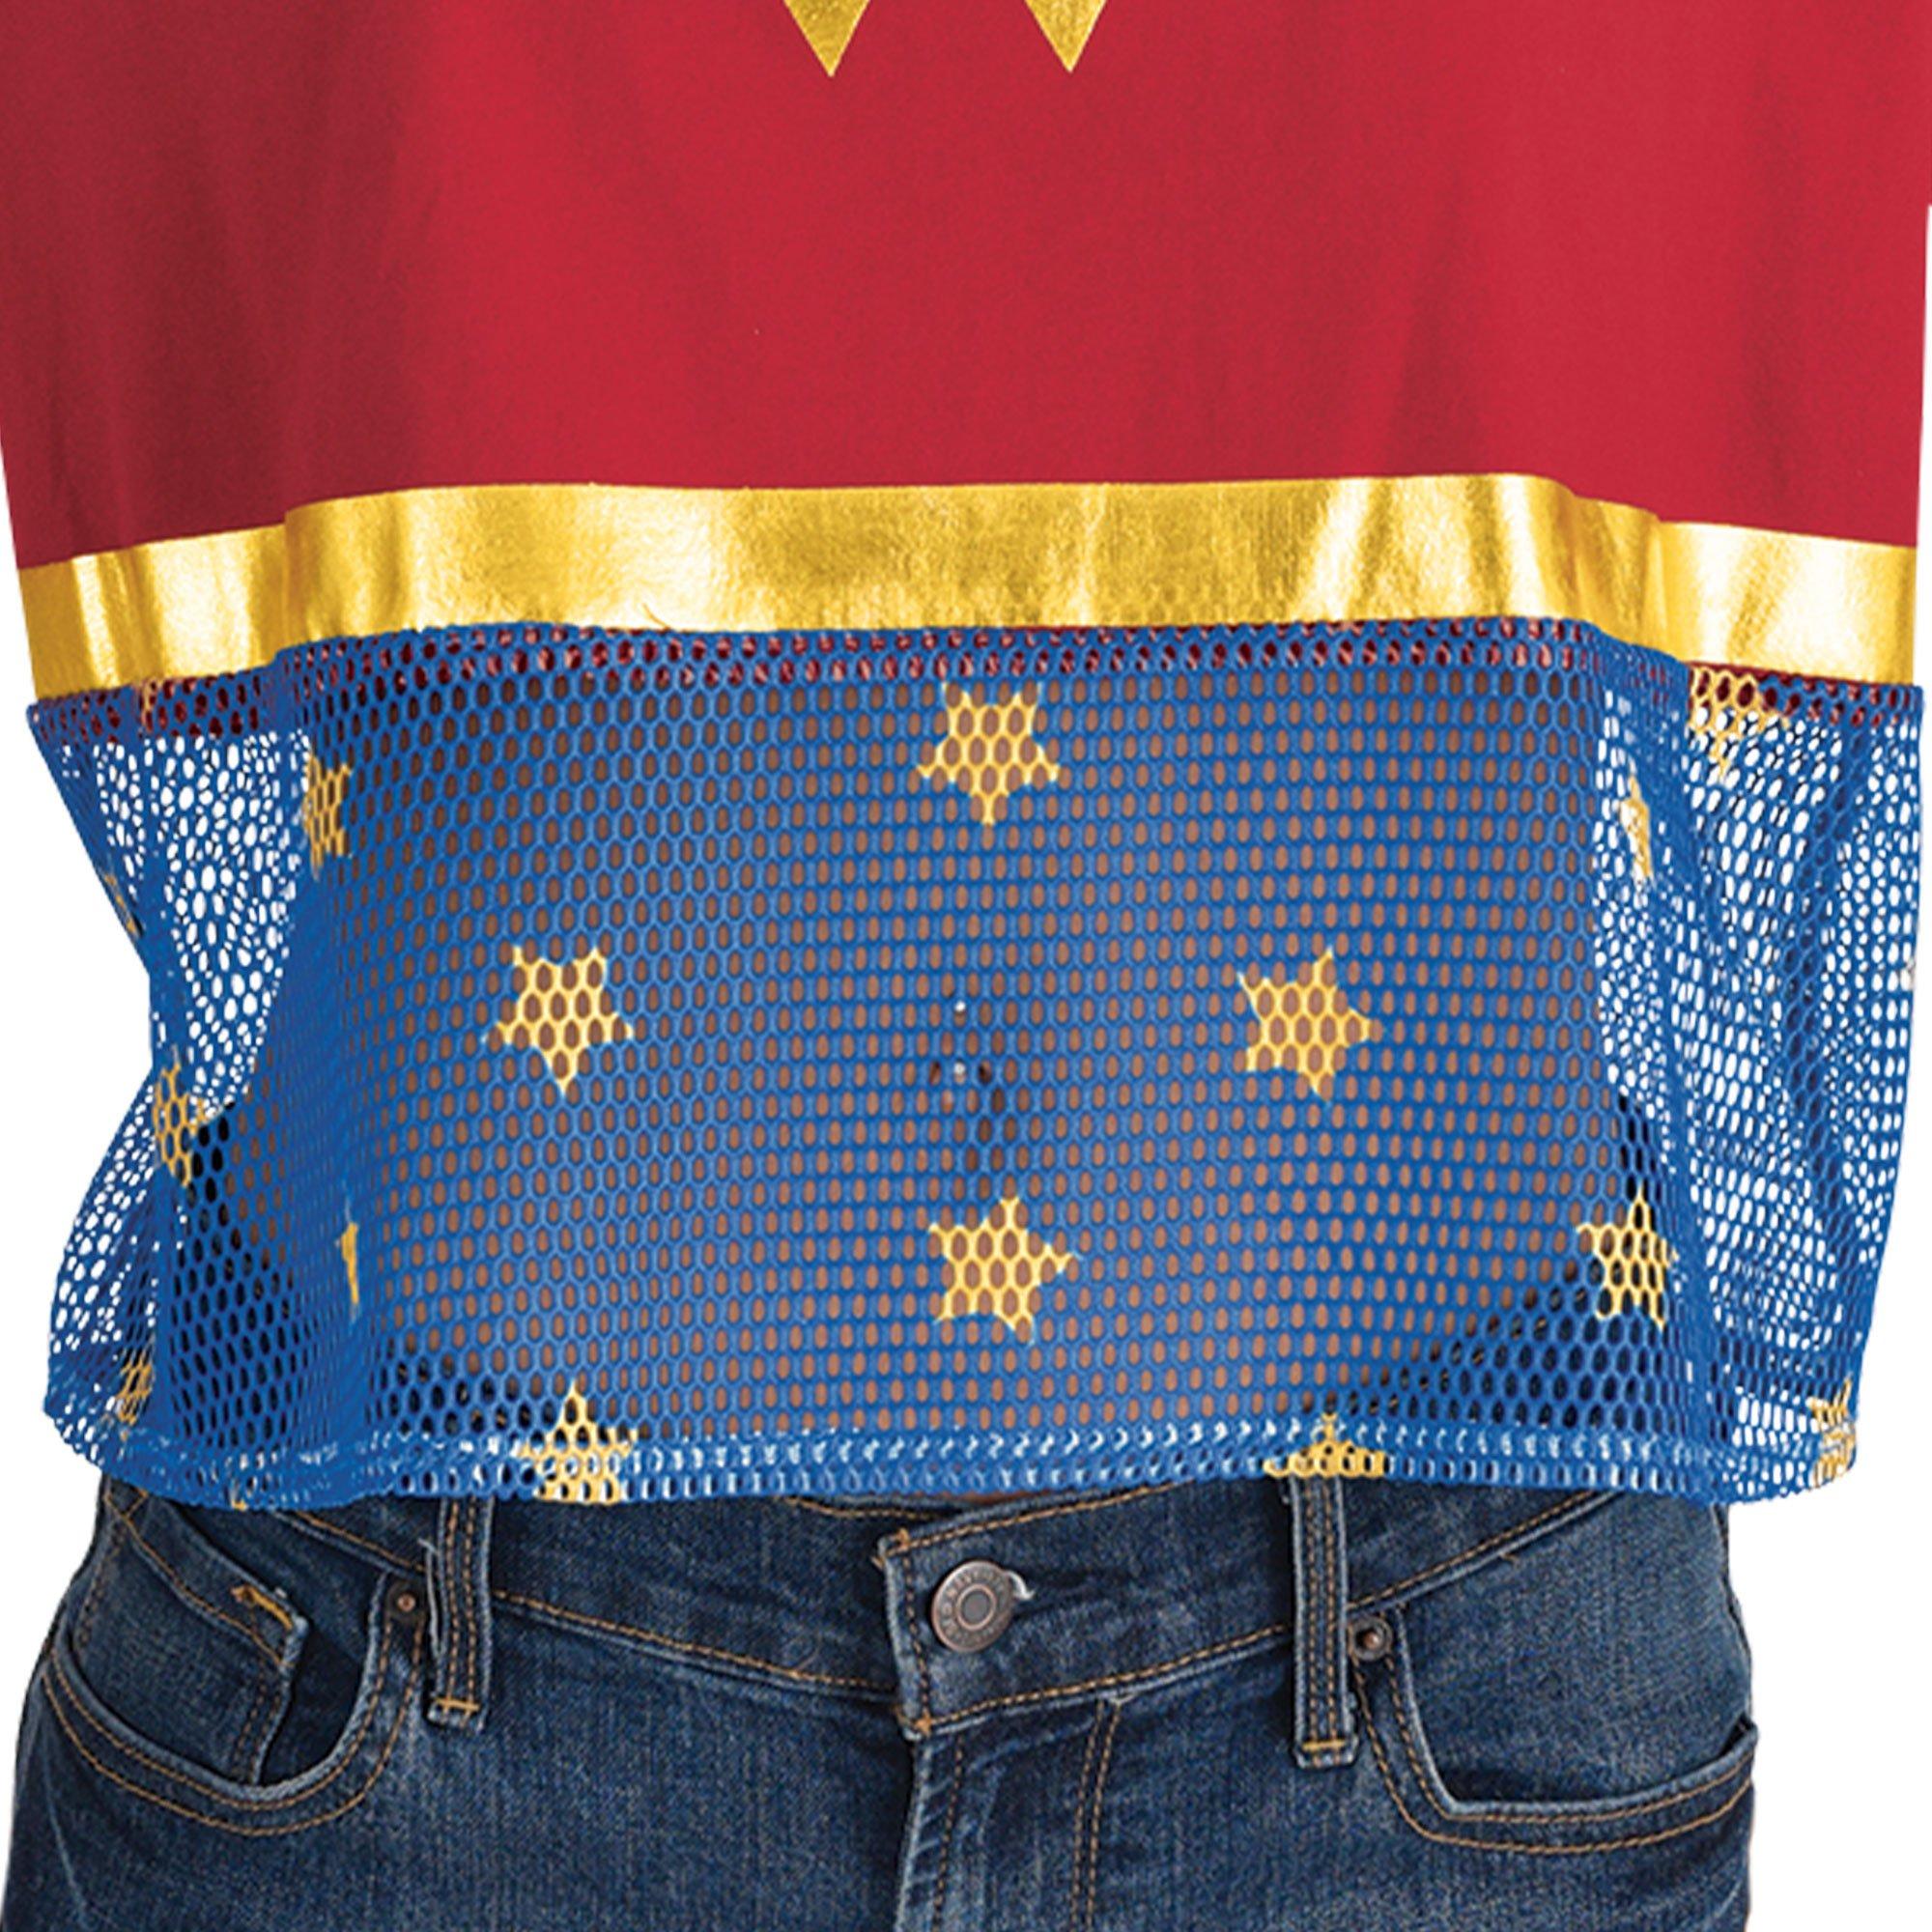 Adult Cropped Wonder Woman T-Shirt